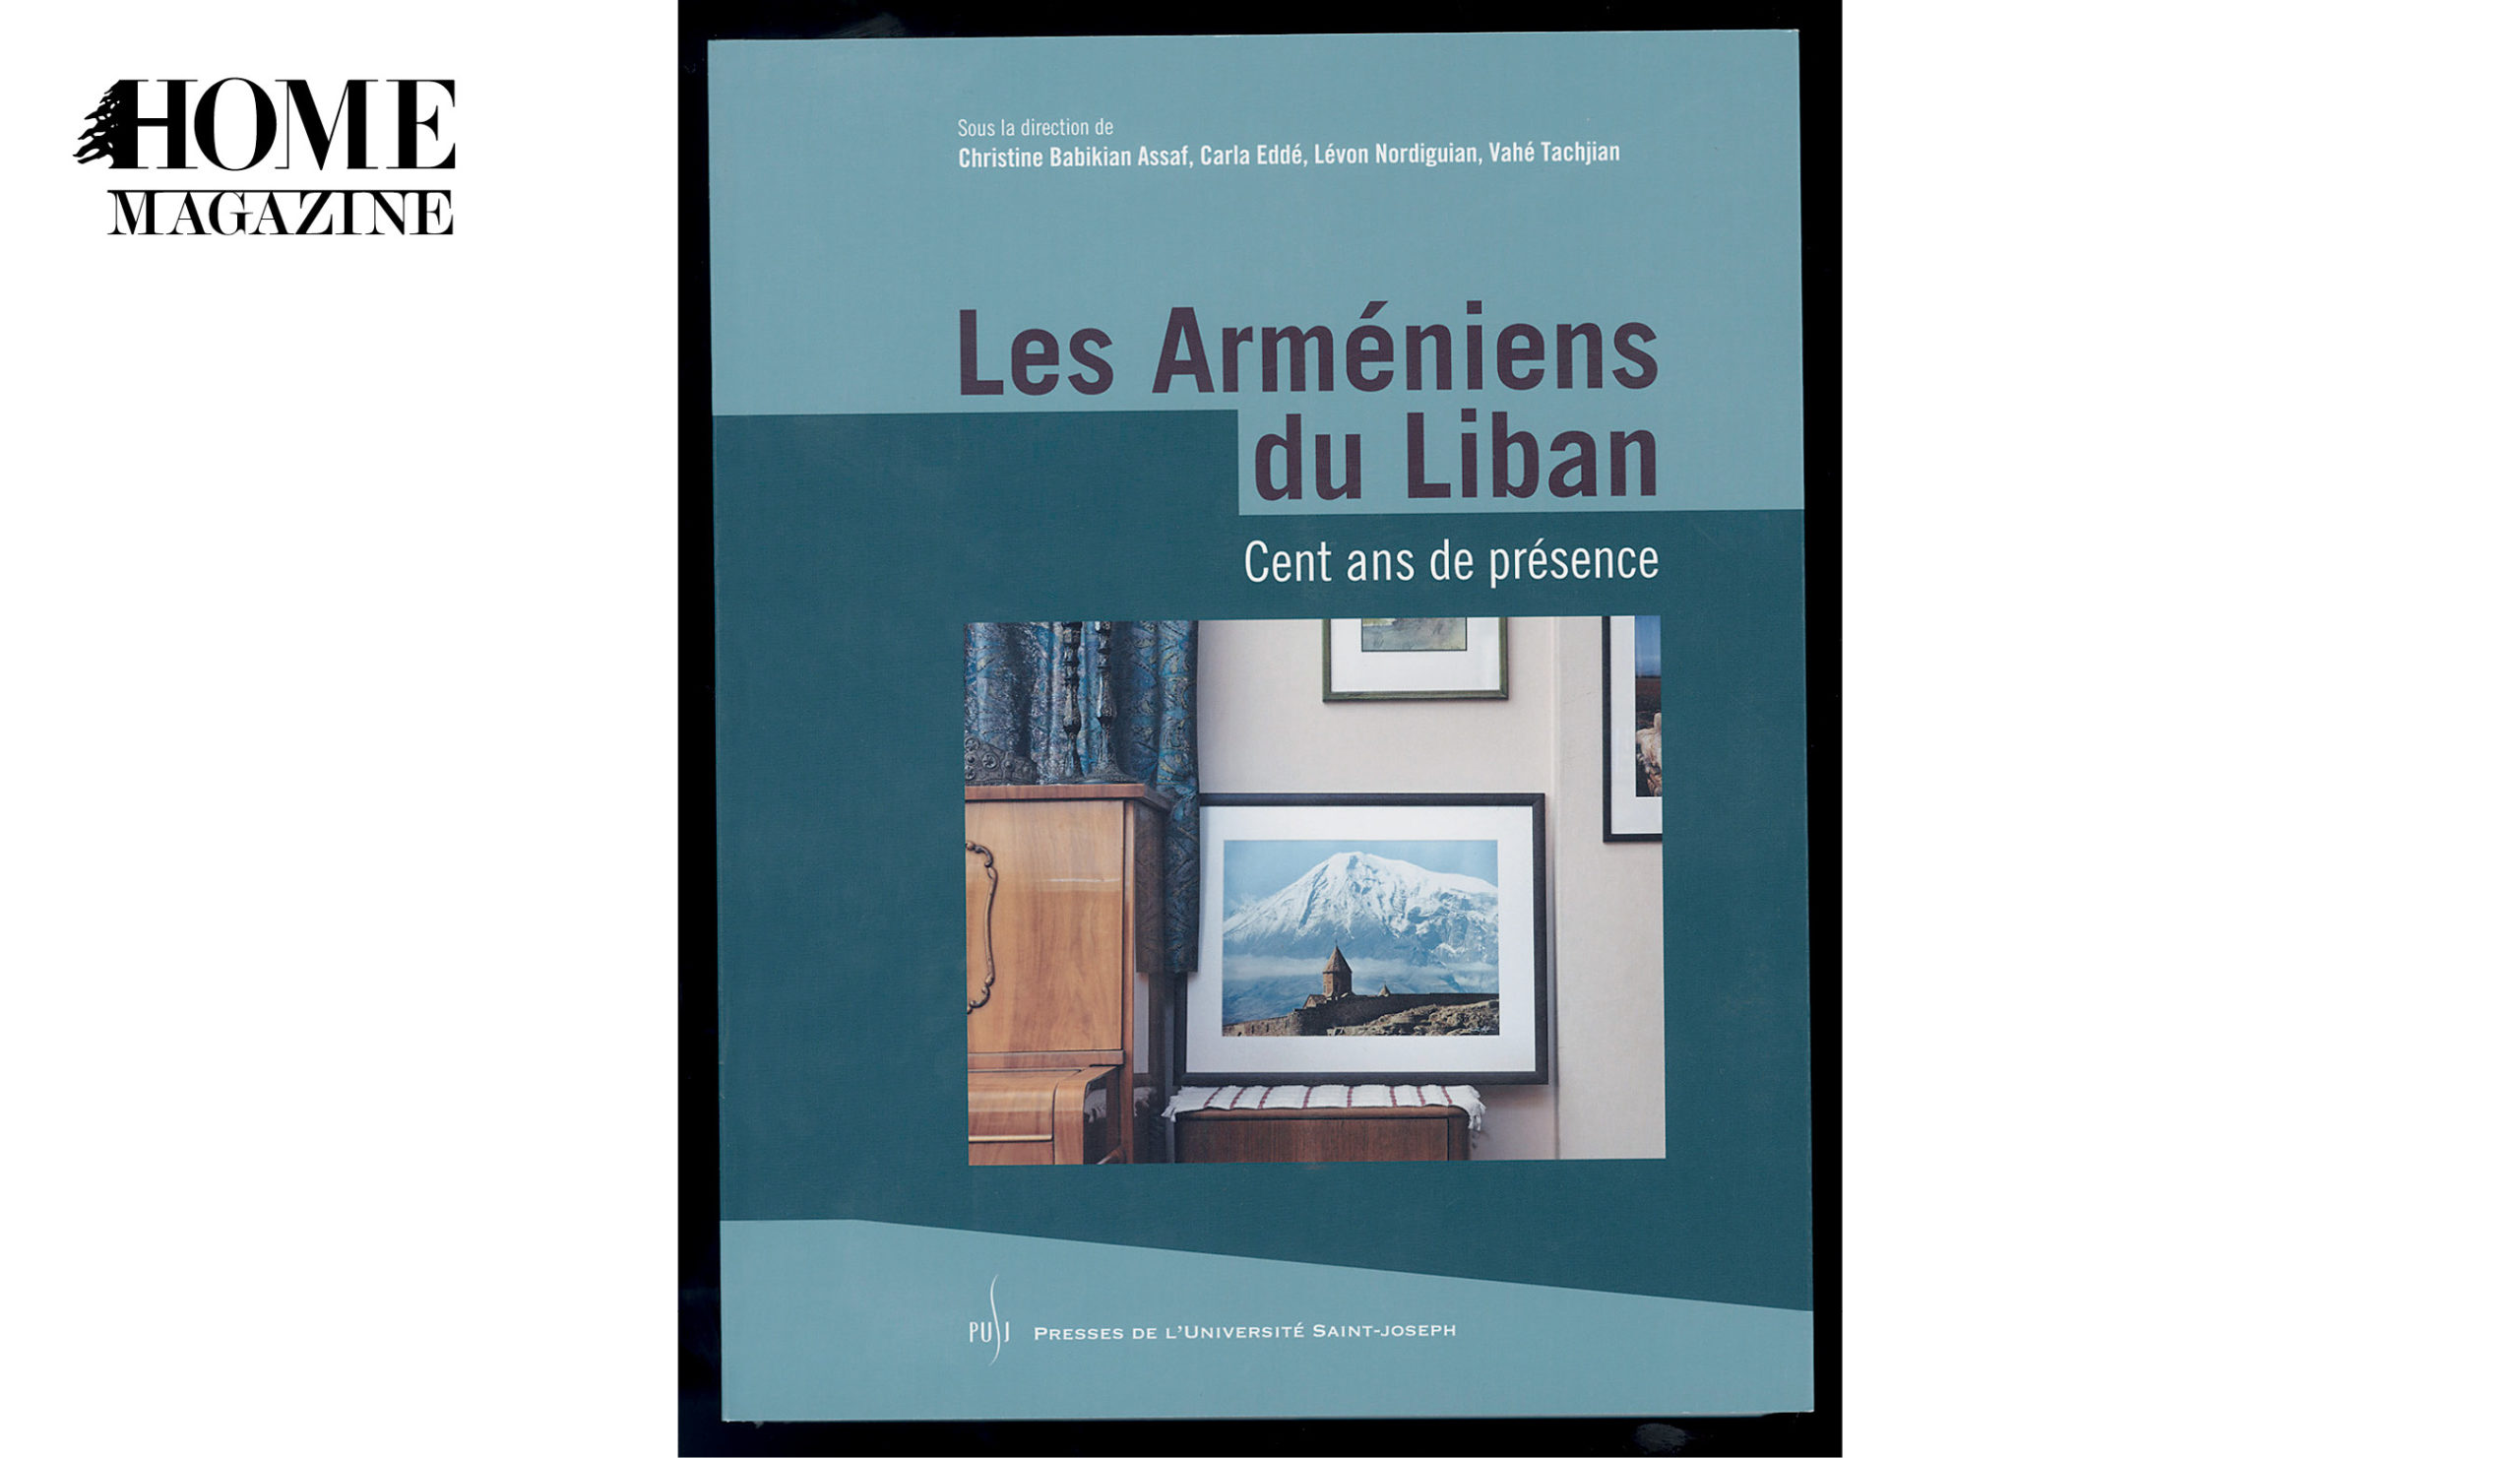 Book with blue cover titles Les Armeniens du Liban